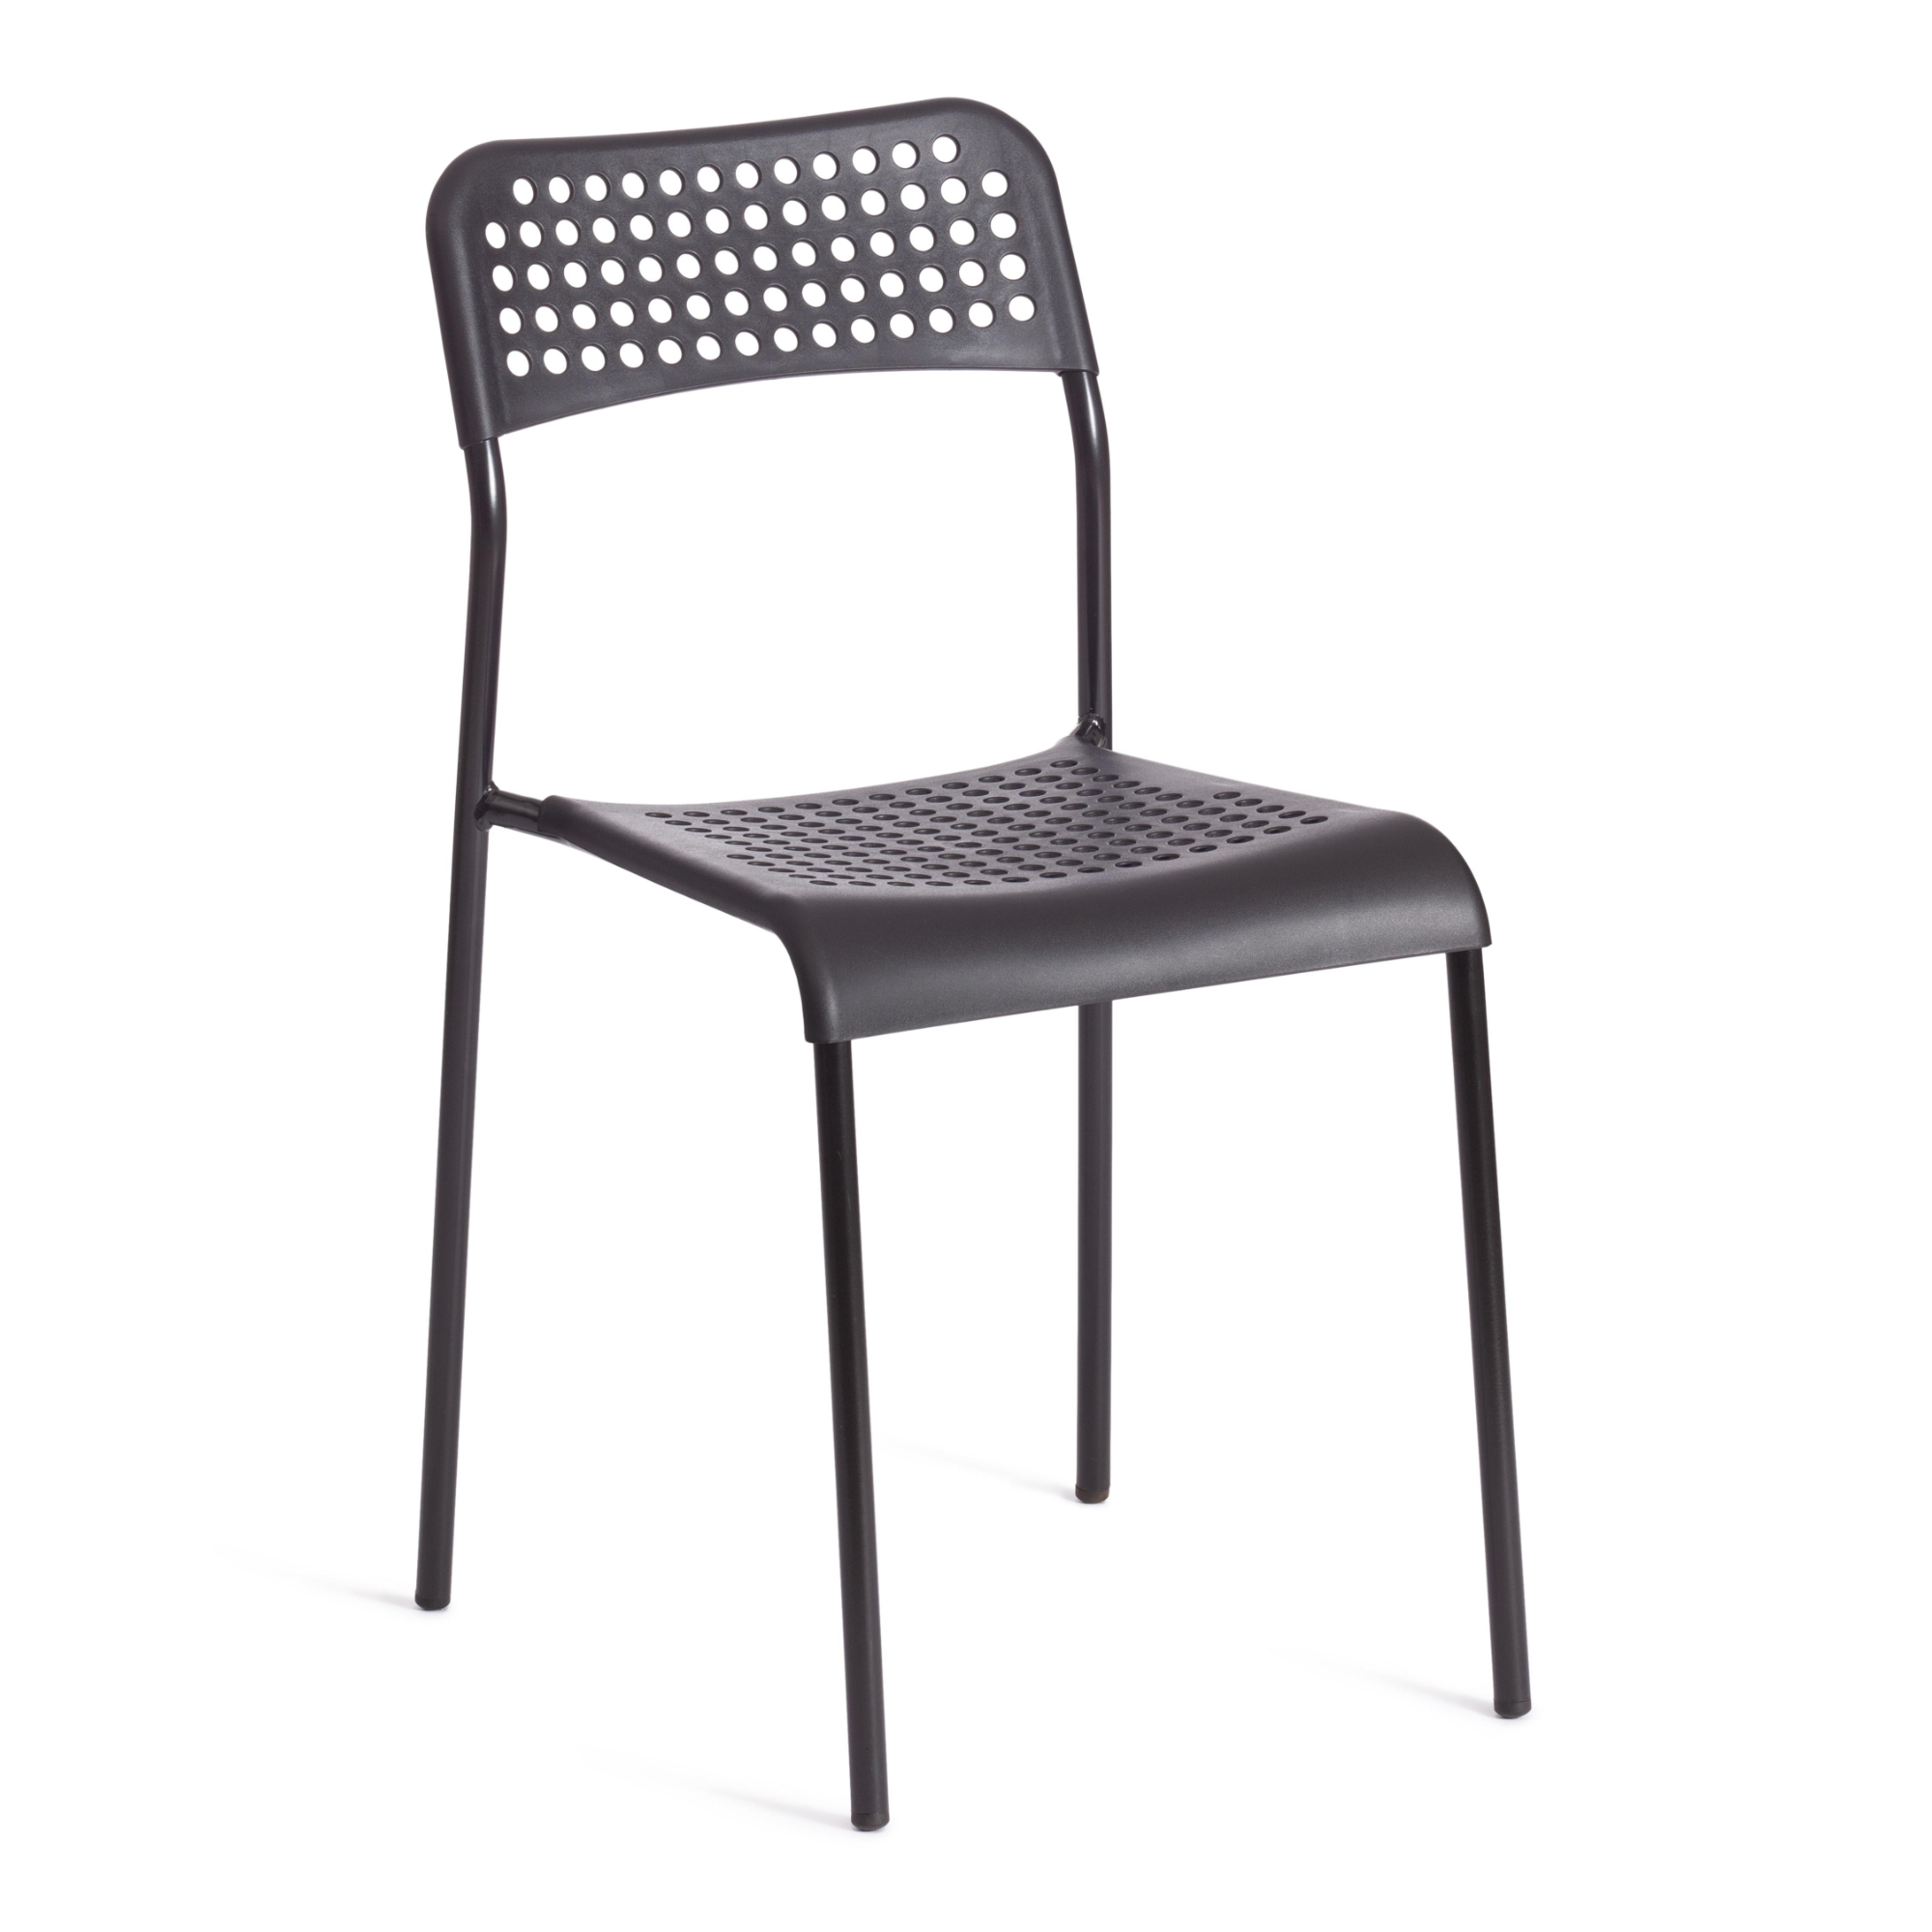 Стул ТС Adde черный пластиковый с металлическими ножками 39х49х78 см стул тс cindy chair пластиковый с ножками из бука бежевый 45х51х82 см